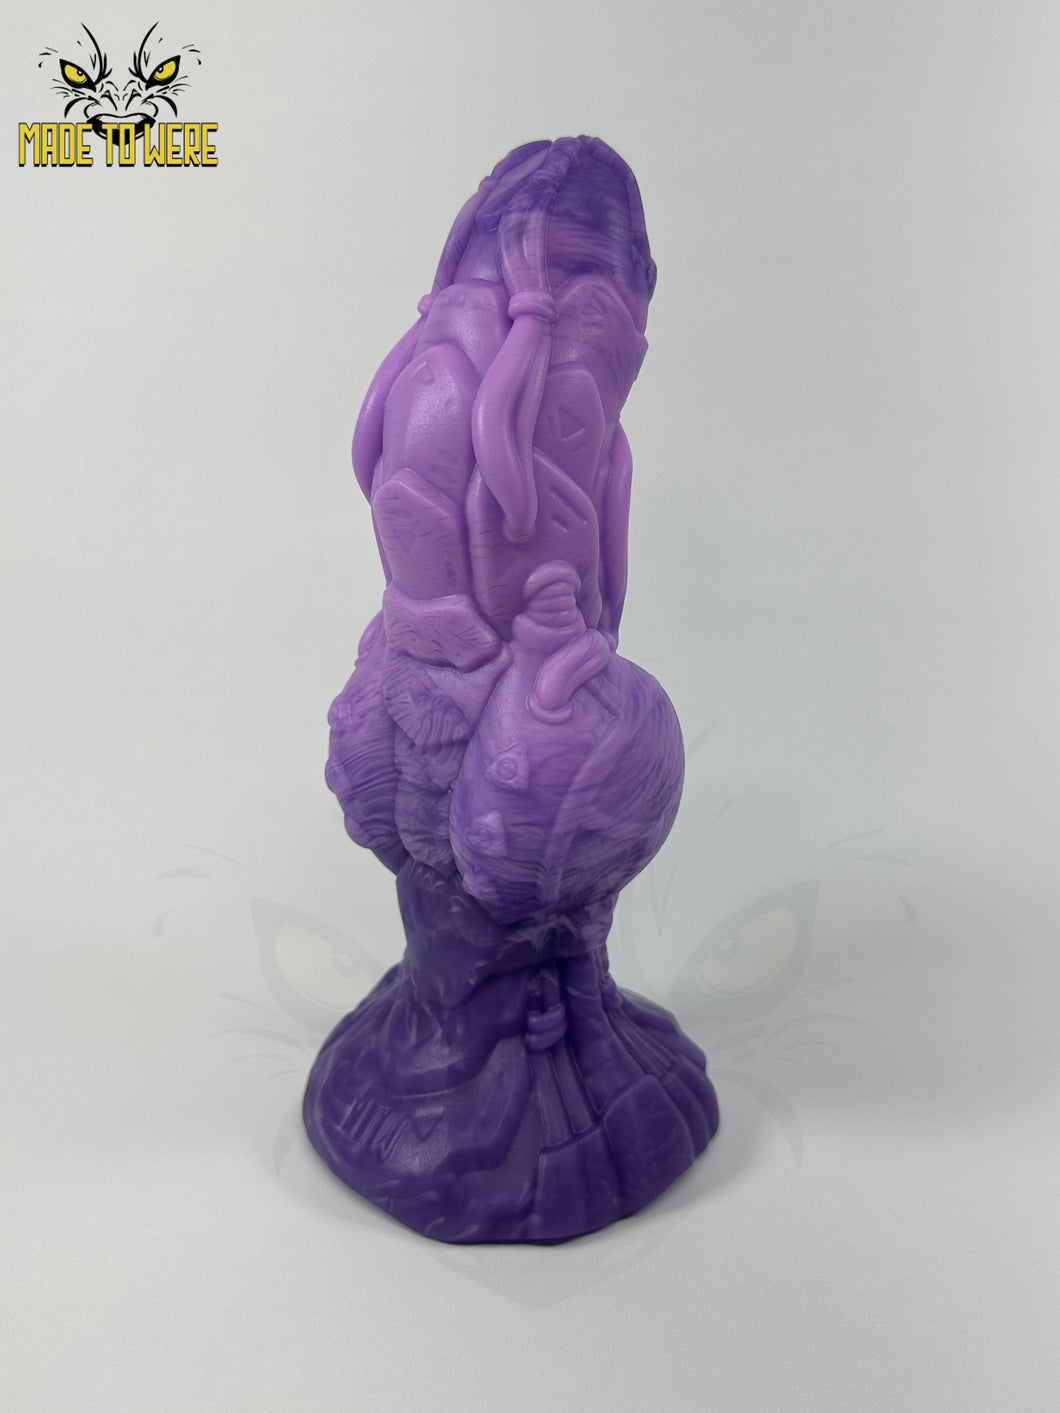 Medium Size Render, Medium 00-50 Firmness, Purple Marble